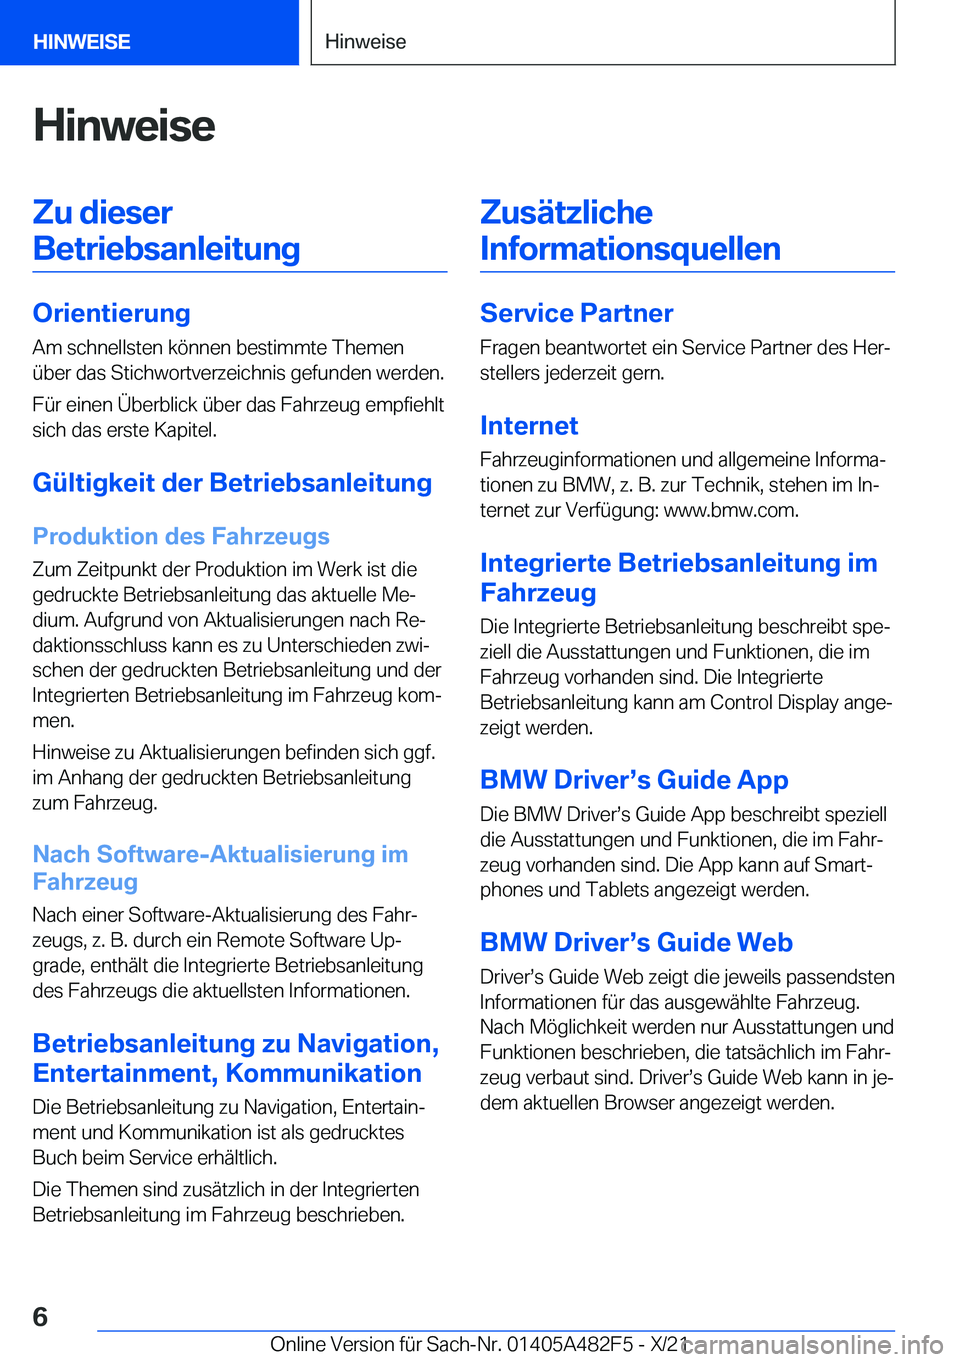 BMW X3 2022  Betriebsanleitungen (in German) �H�i�n�w�e�i�s�e�Z�u��d�i�e�s�e�r�B�e�t�r�i�e�b�s�a�n�l�e�i�t�u�n�g
�O�r�i�e�n�t�i�e�r�u�n�g �A�m��s�c�h�n�e�l�l�s�t�e�n��k�